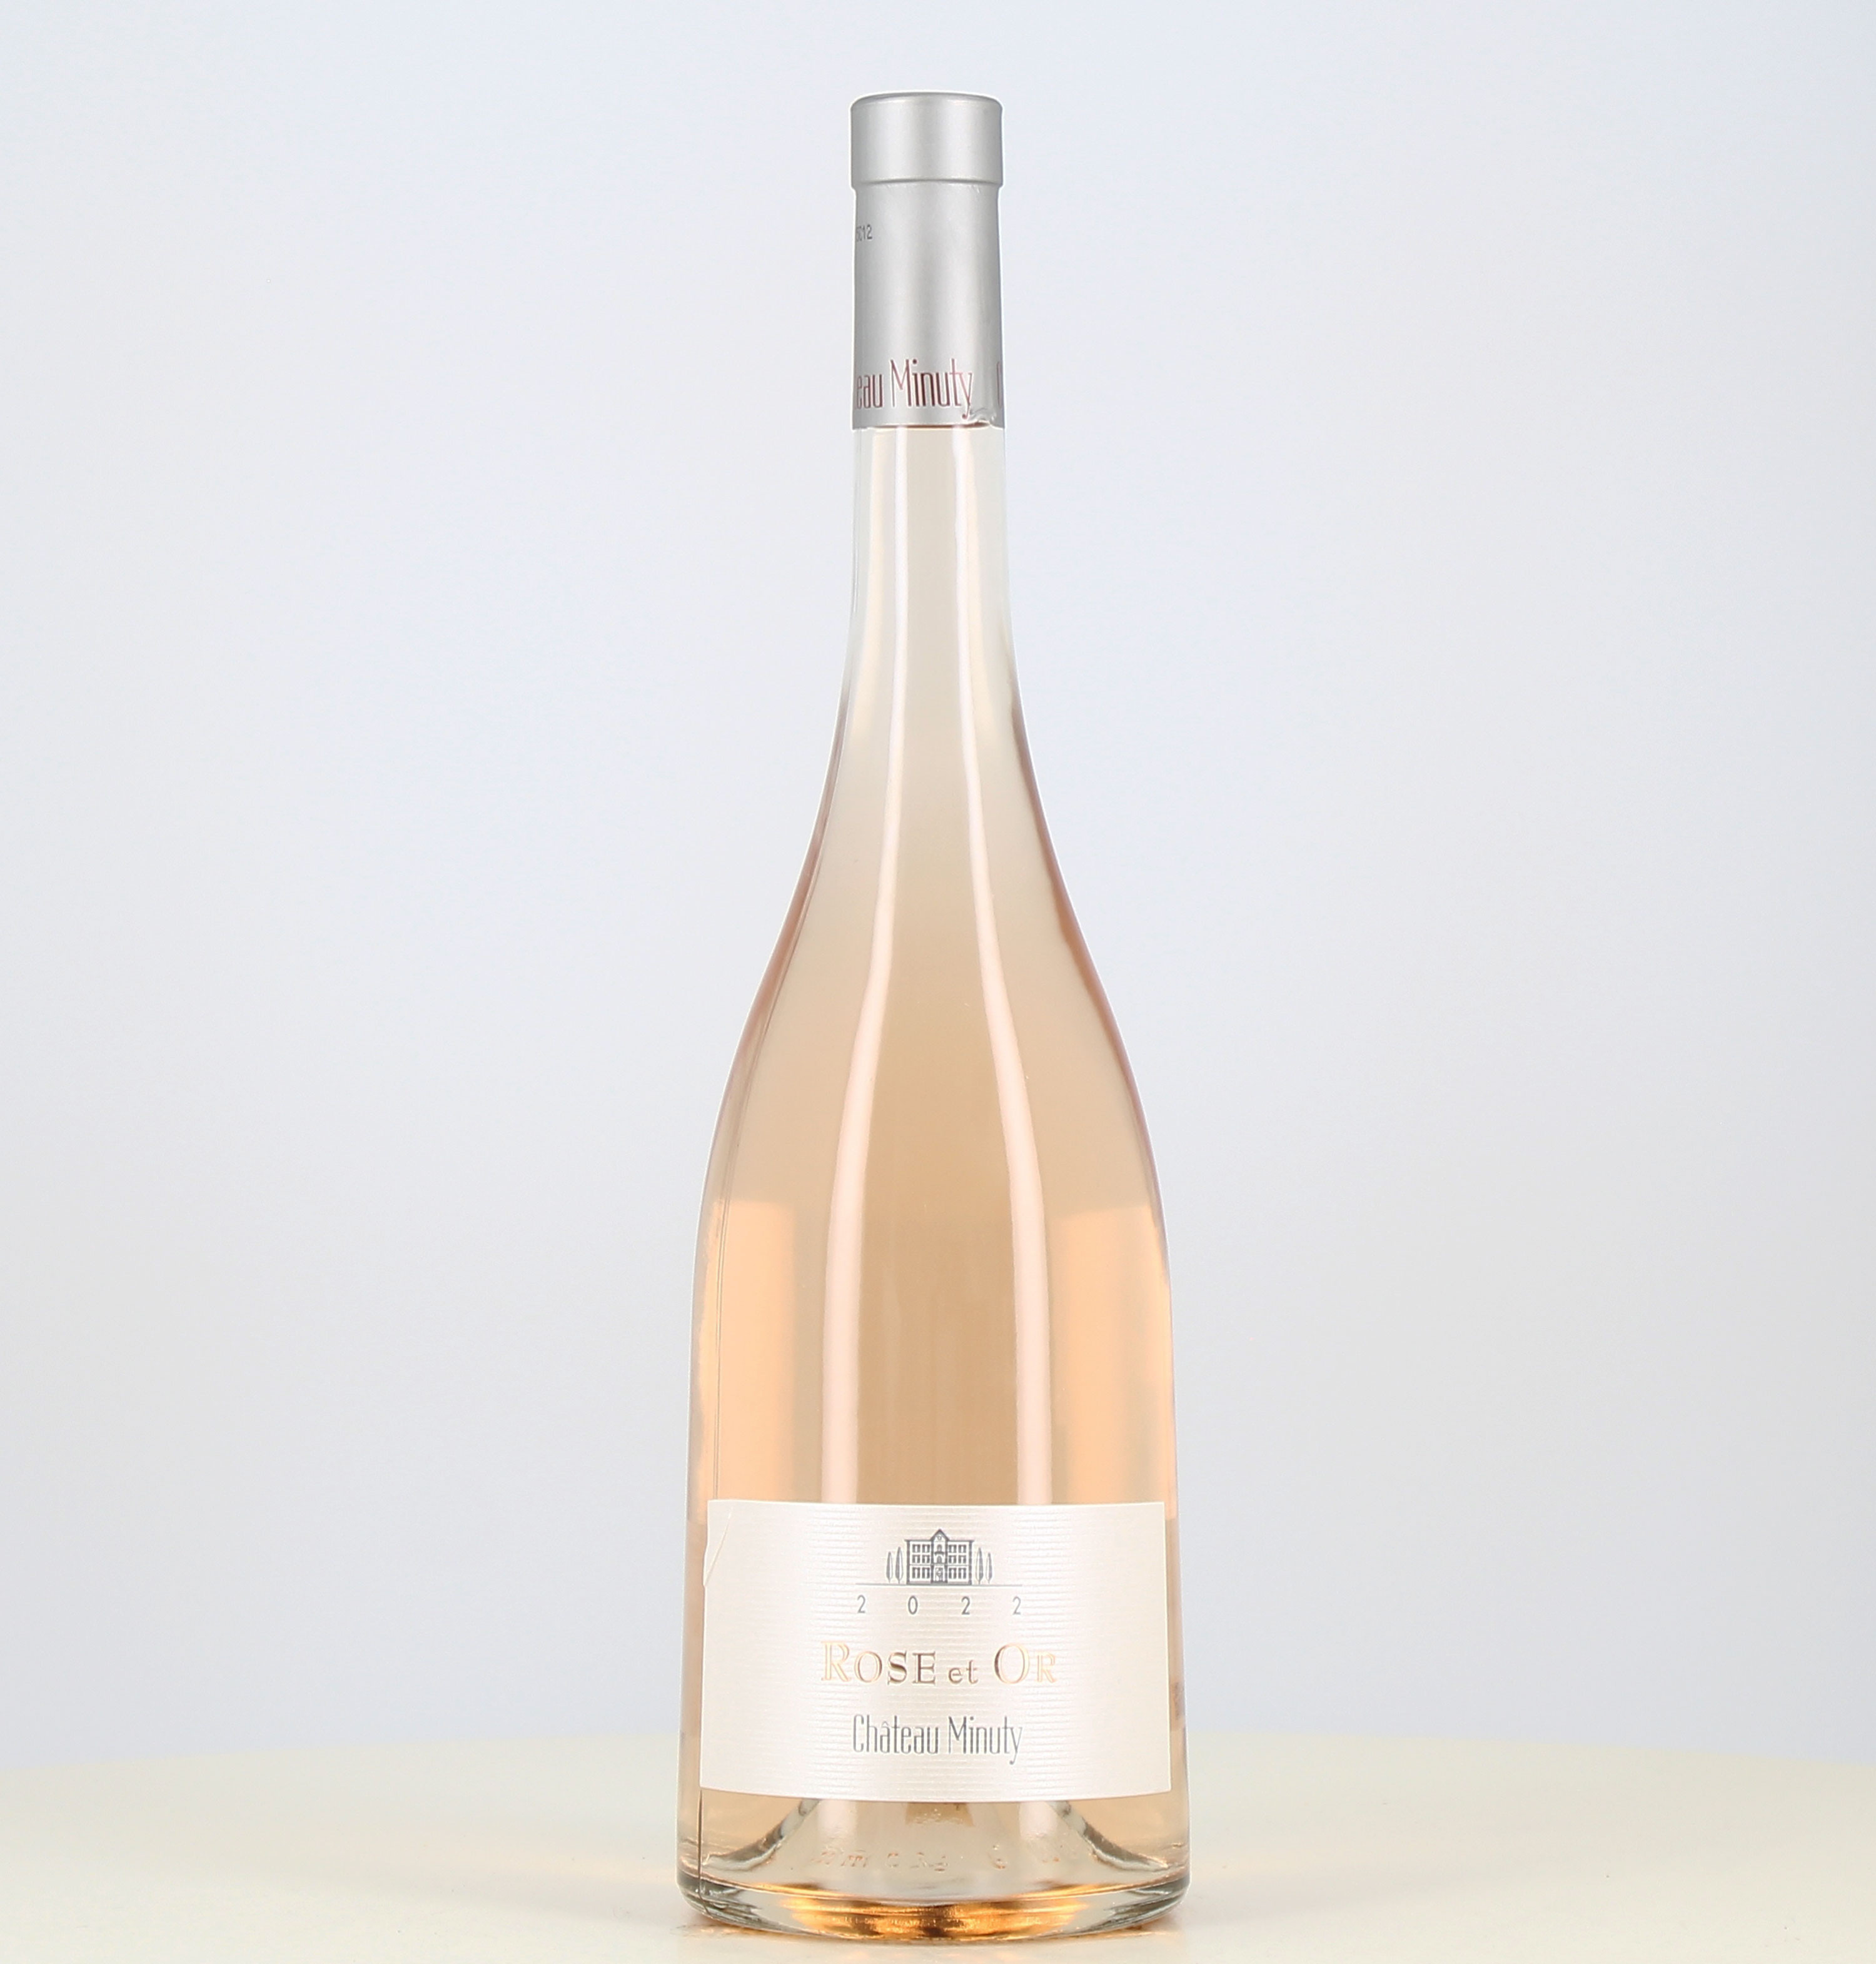 Magnum of Minuty Rose & Or Côtes de Provence 2022 rosé wine. 